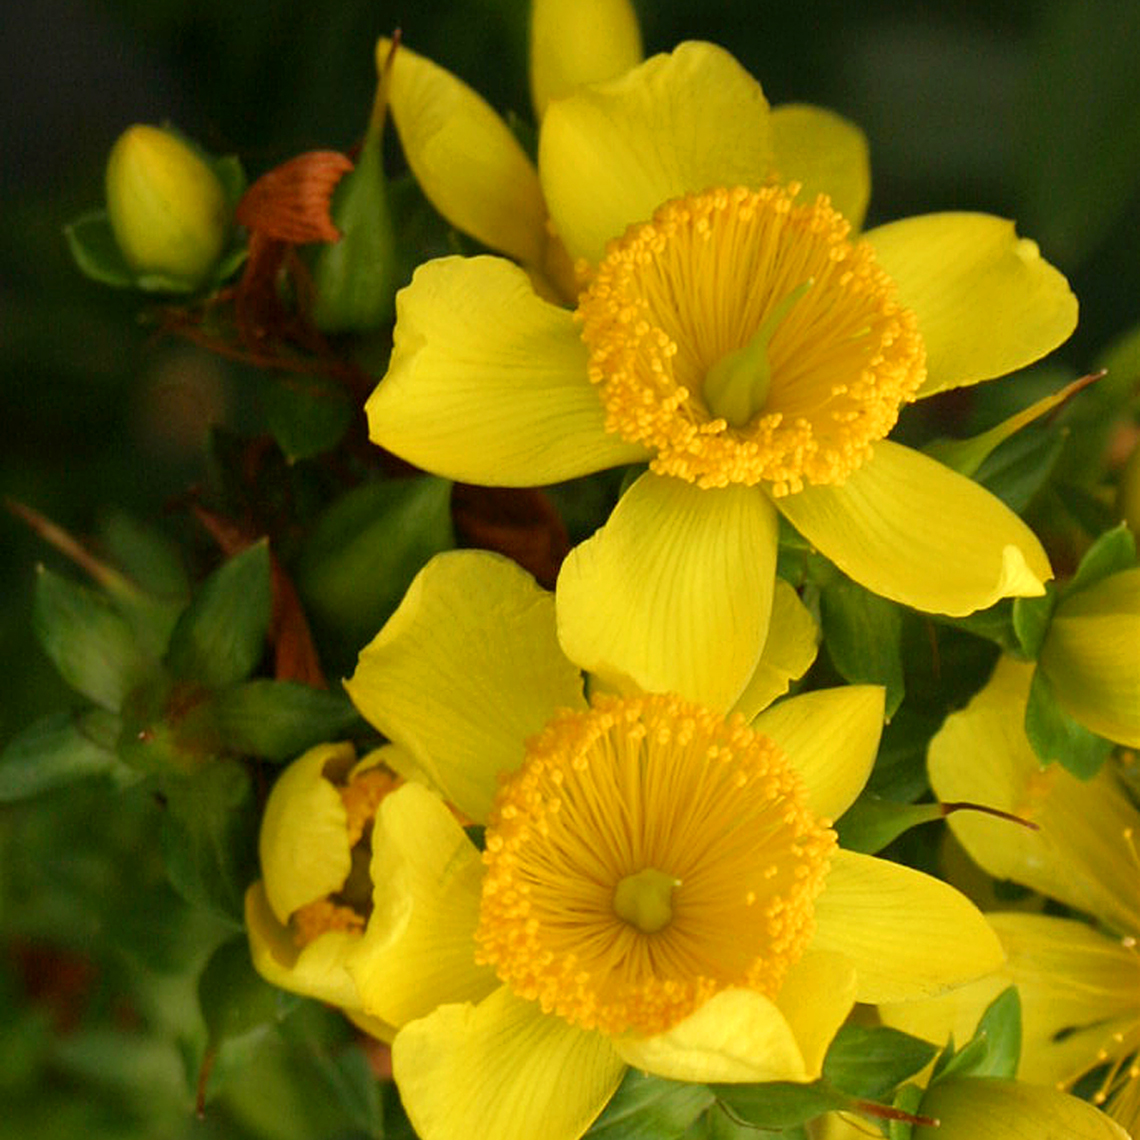 Closeup of the yellow sunburst flowers of Sunny Boulevard hypericum